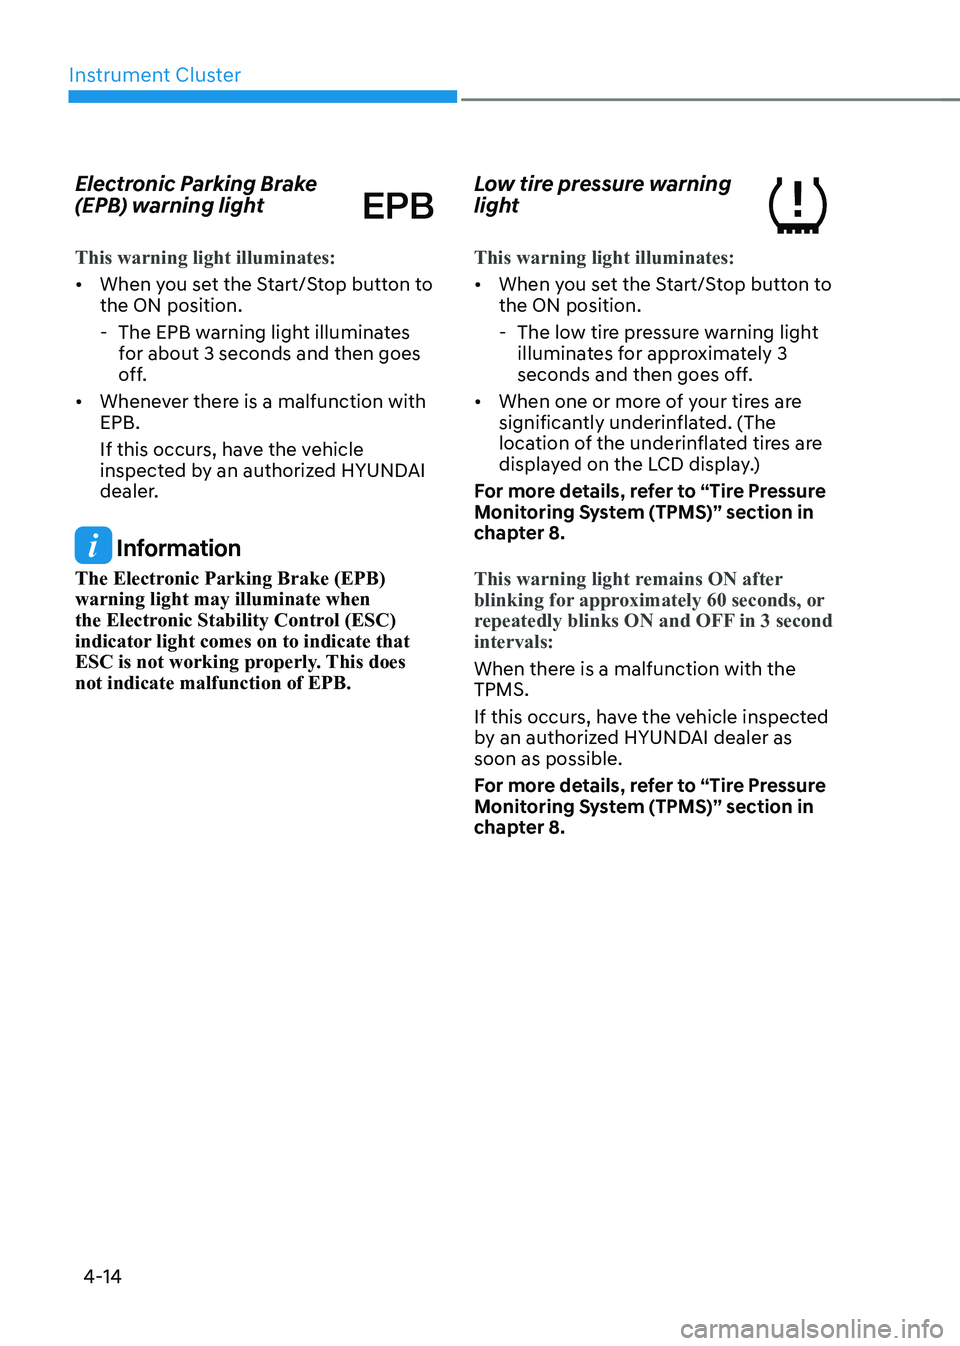 HYUNDAI IONIQ 5 2023  Owners Manual Instrument Cluster
4-14
Electronic Parking Brake  
(EPB) warning light
This warning light illuminates:
•	
When you set the Start/Stop button to  the ON position.
 - The EPB warning light illuminates